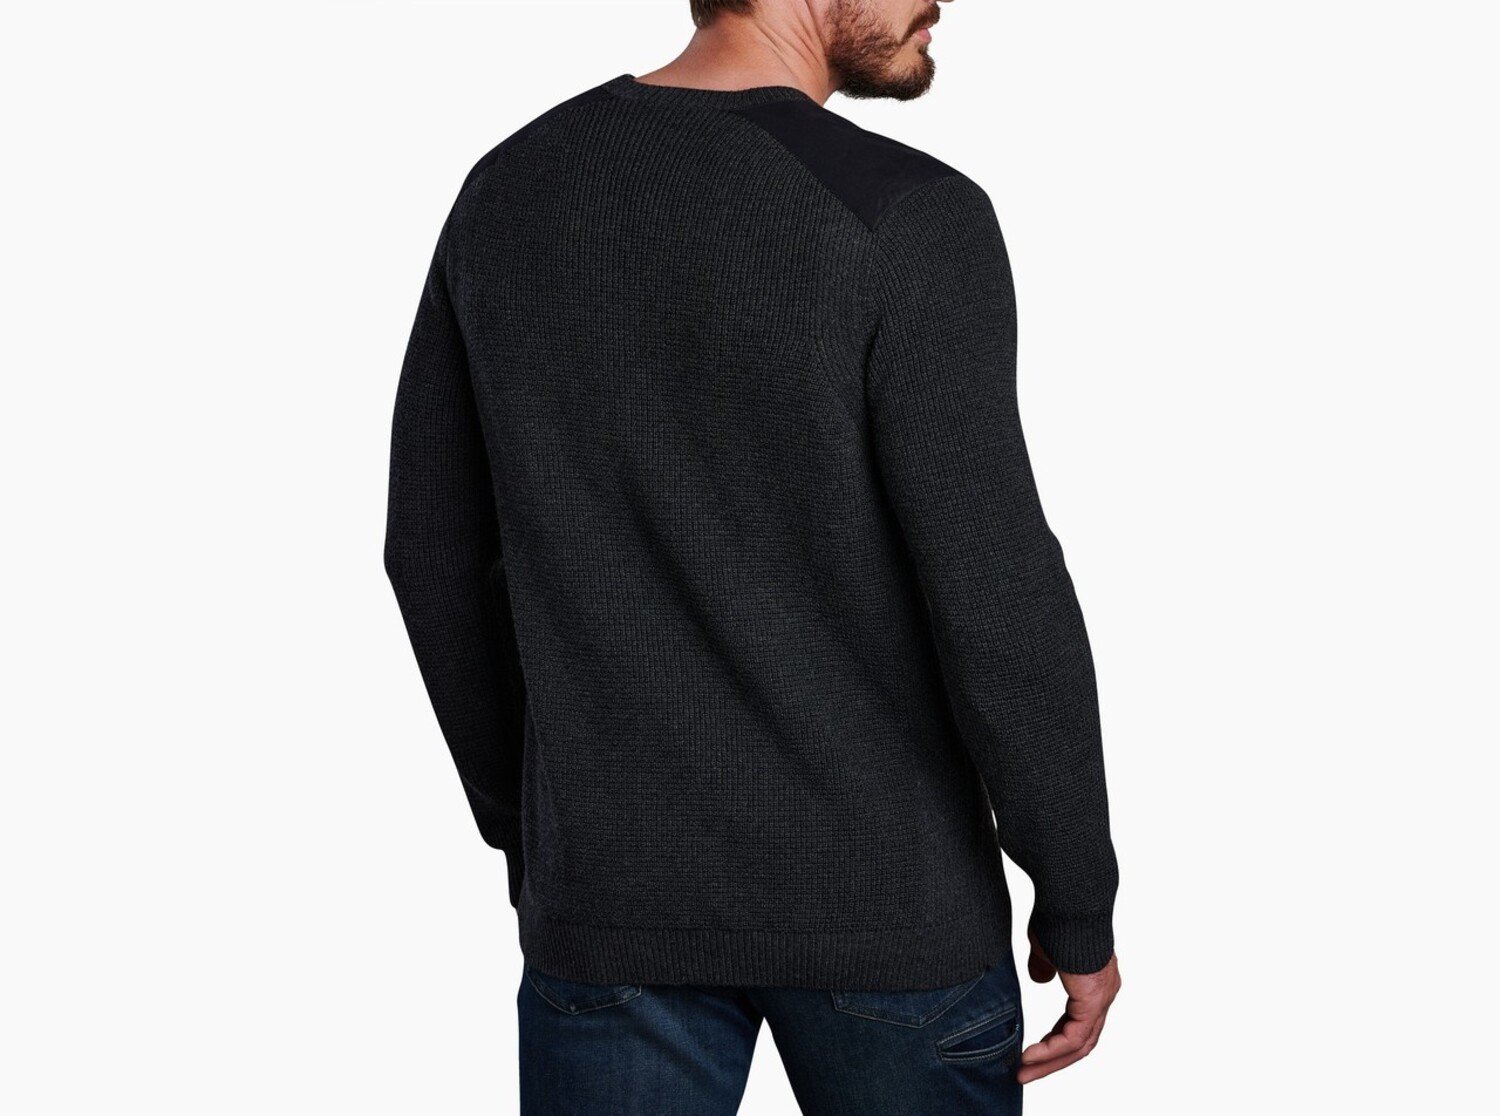 https://cdn.shoplightspeed.com/shops/635455/files/51192725/1500x4000x3/kuhl-evader-sweater-graphite.jpg